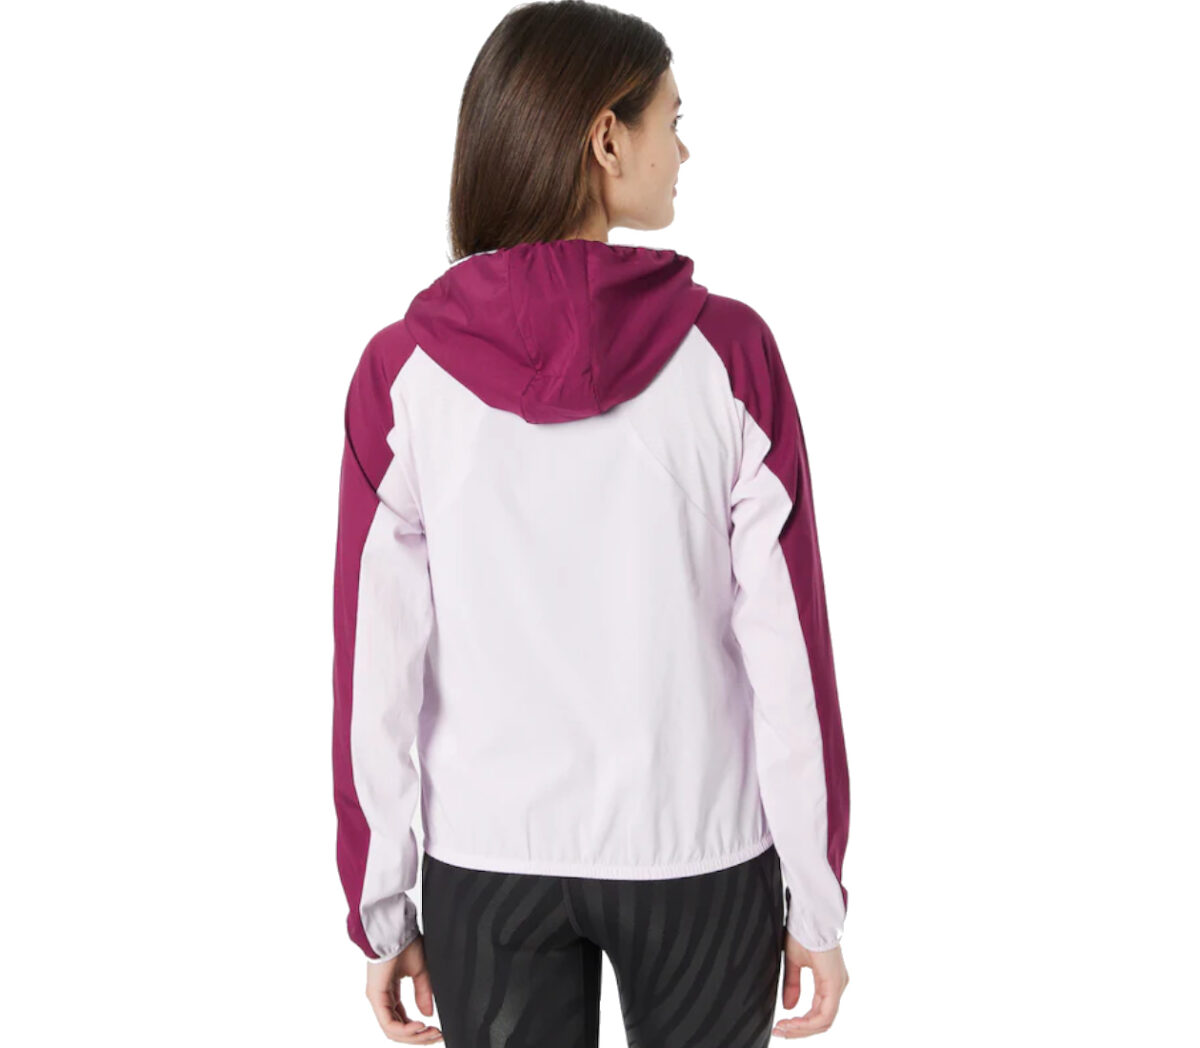 Retro Giacca puma run 5K jacket donna bianca viola